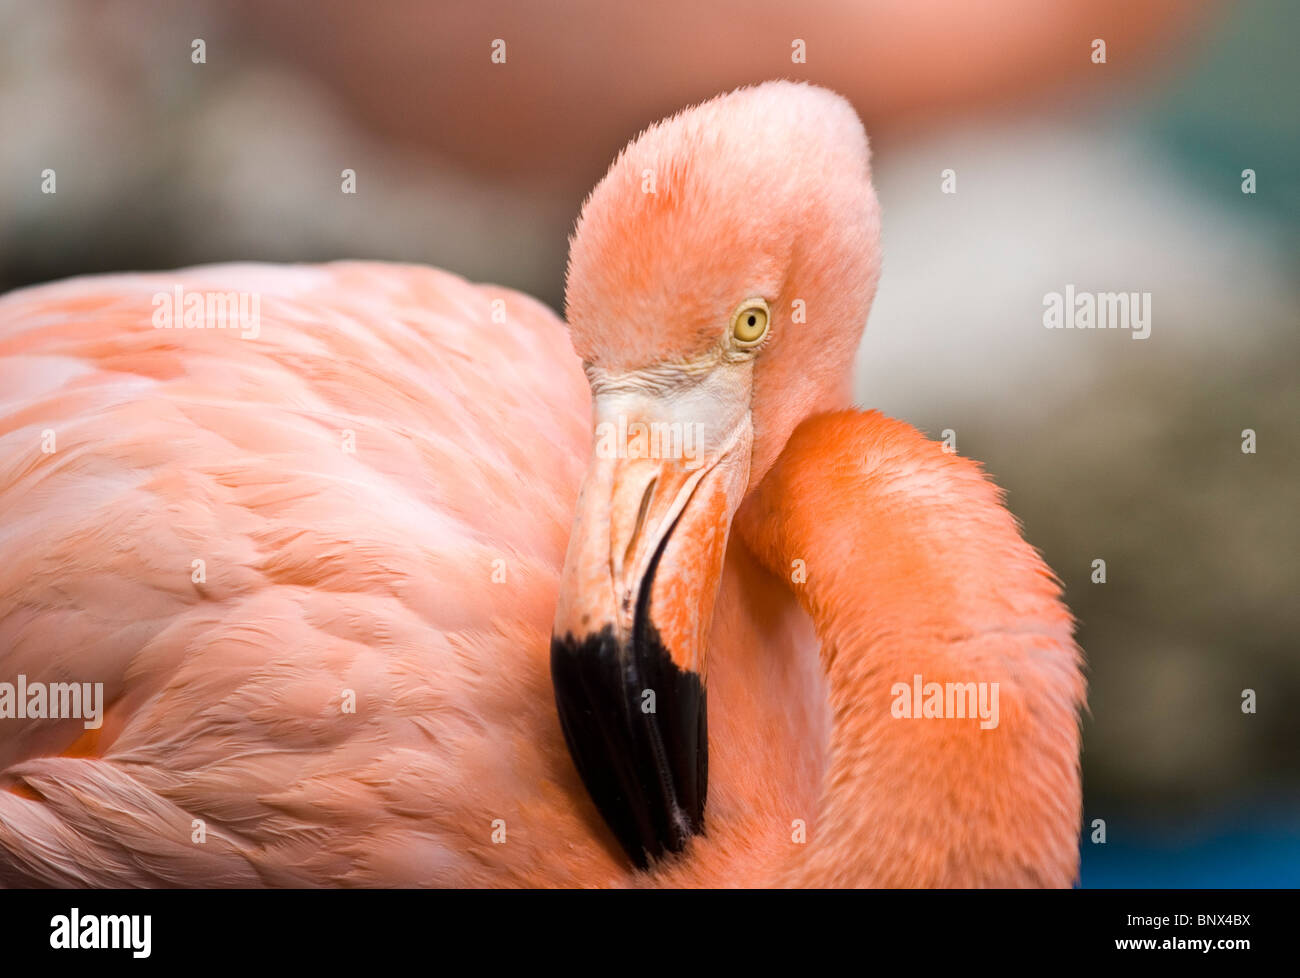 American pink flamingo Curacao, willemstad, netherlands antilles caribbean Stock Photo